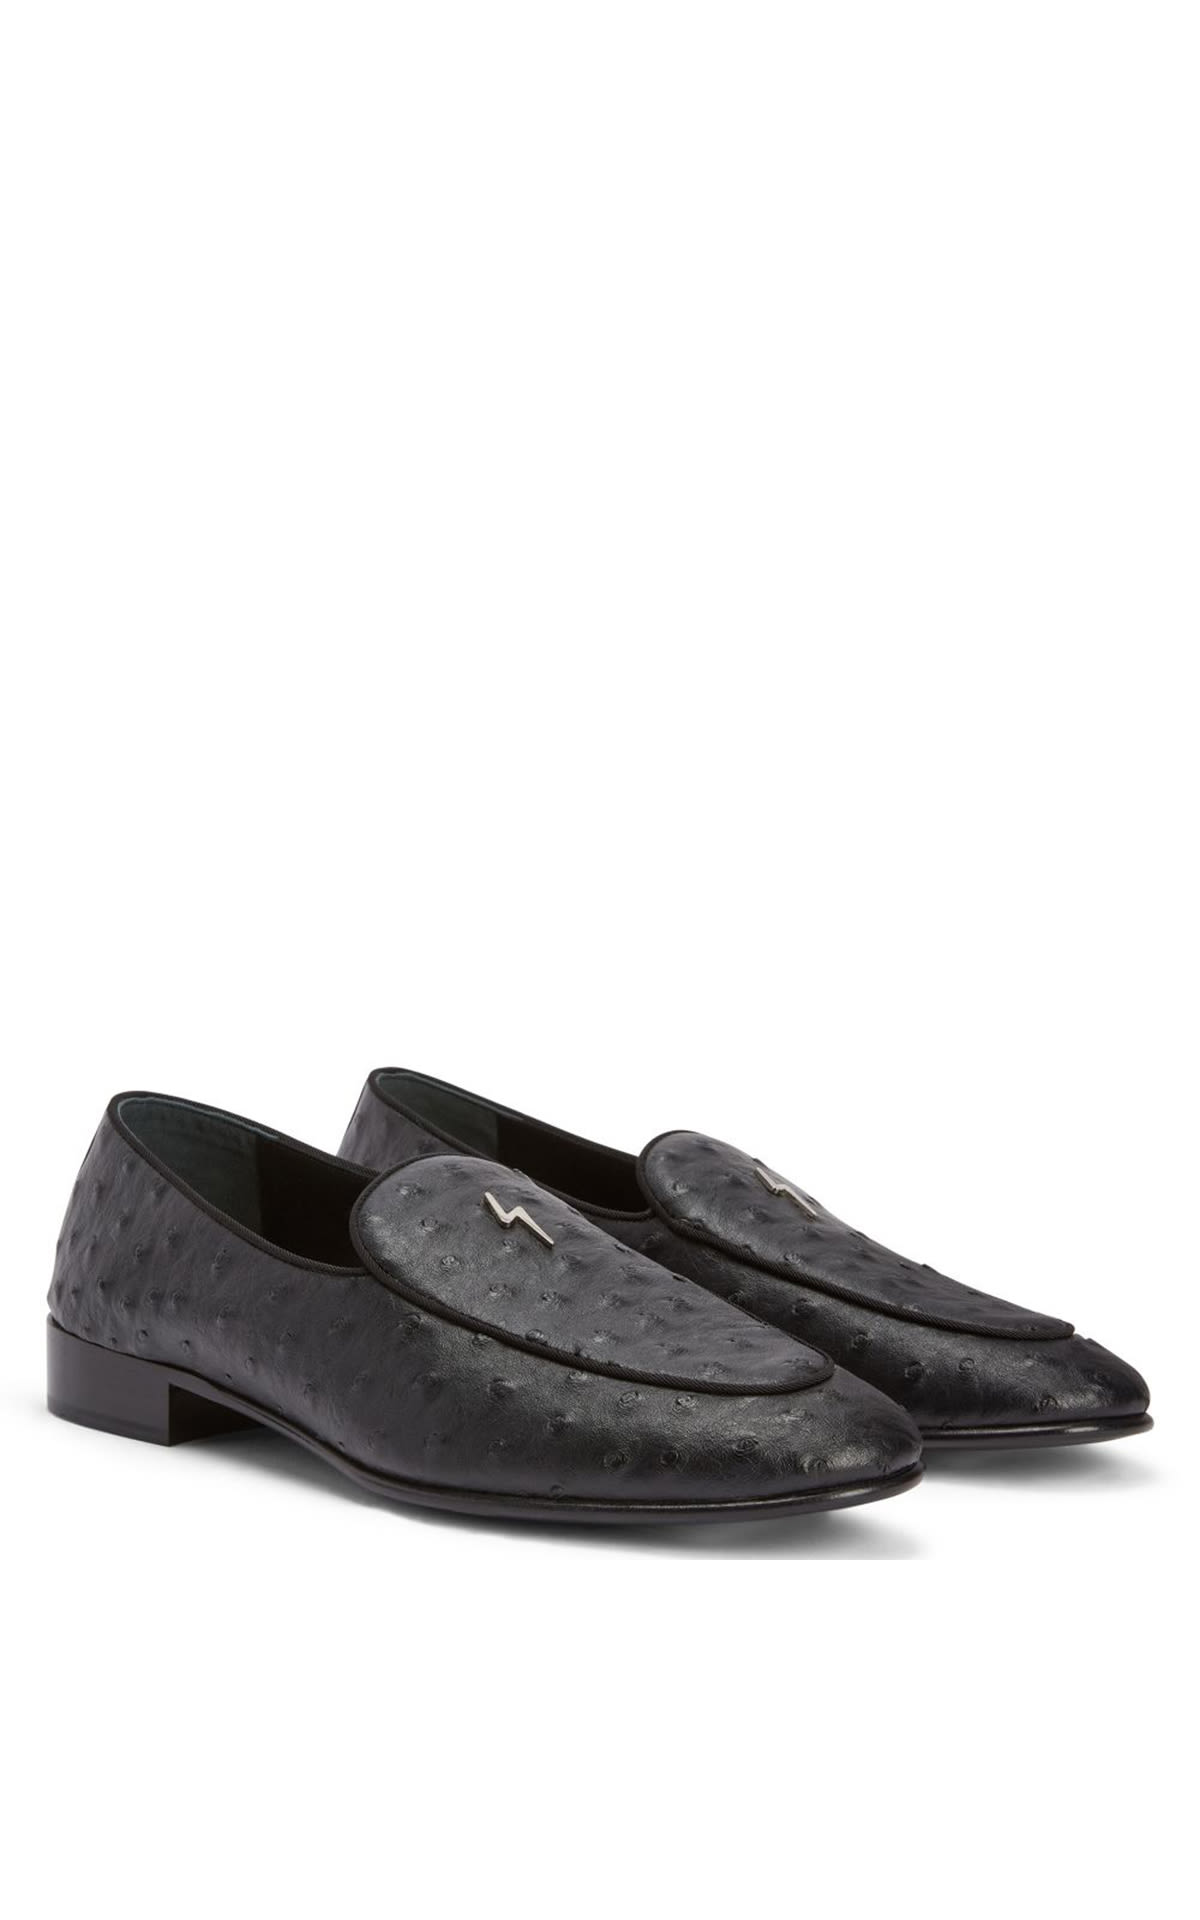 Guiessep Zanotti Ostrich-skin-effect low-heel loafers  from Bicester Village